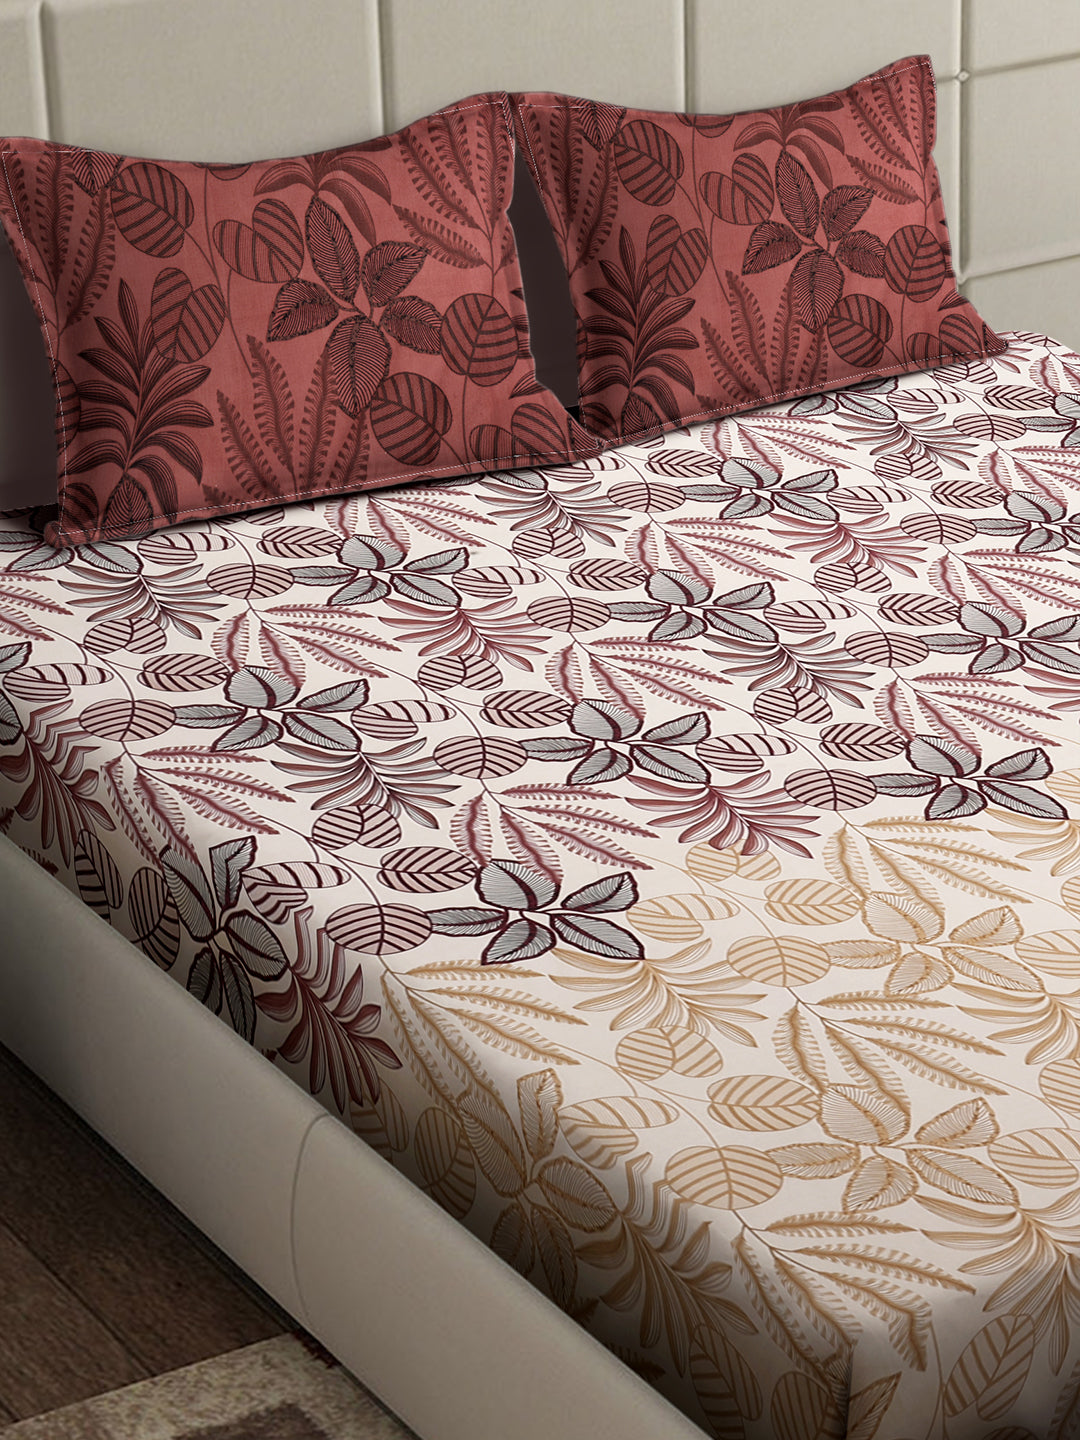 Arrabi Cream Floral TC Cotton Blend Super King Size Bedsheet with 2 Pillow Covers (270 x 260 cm)